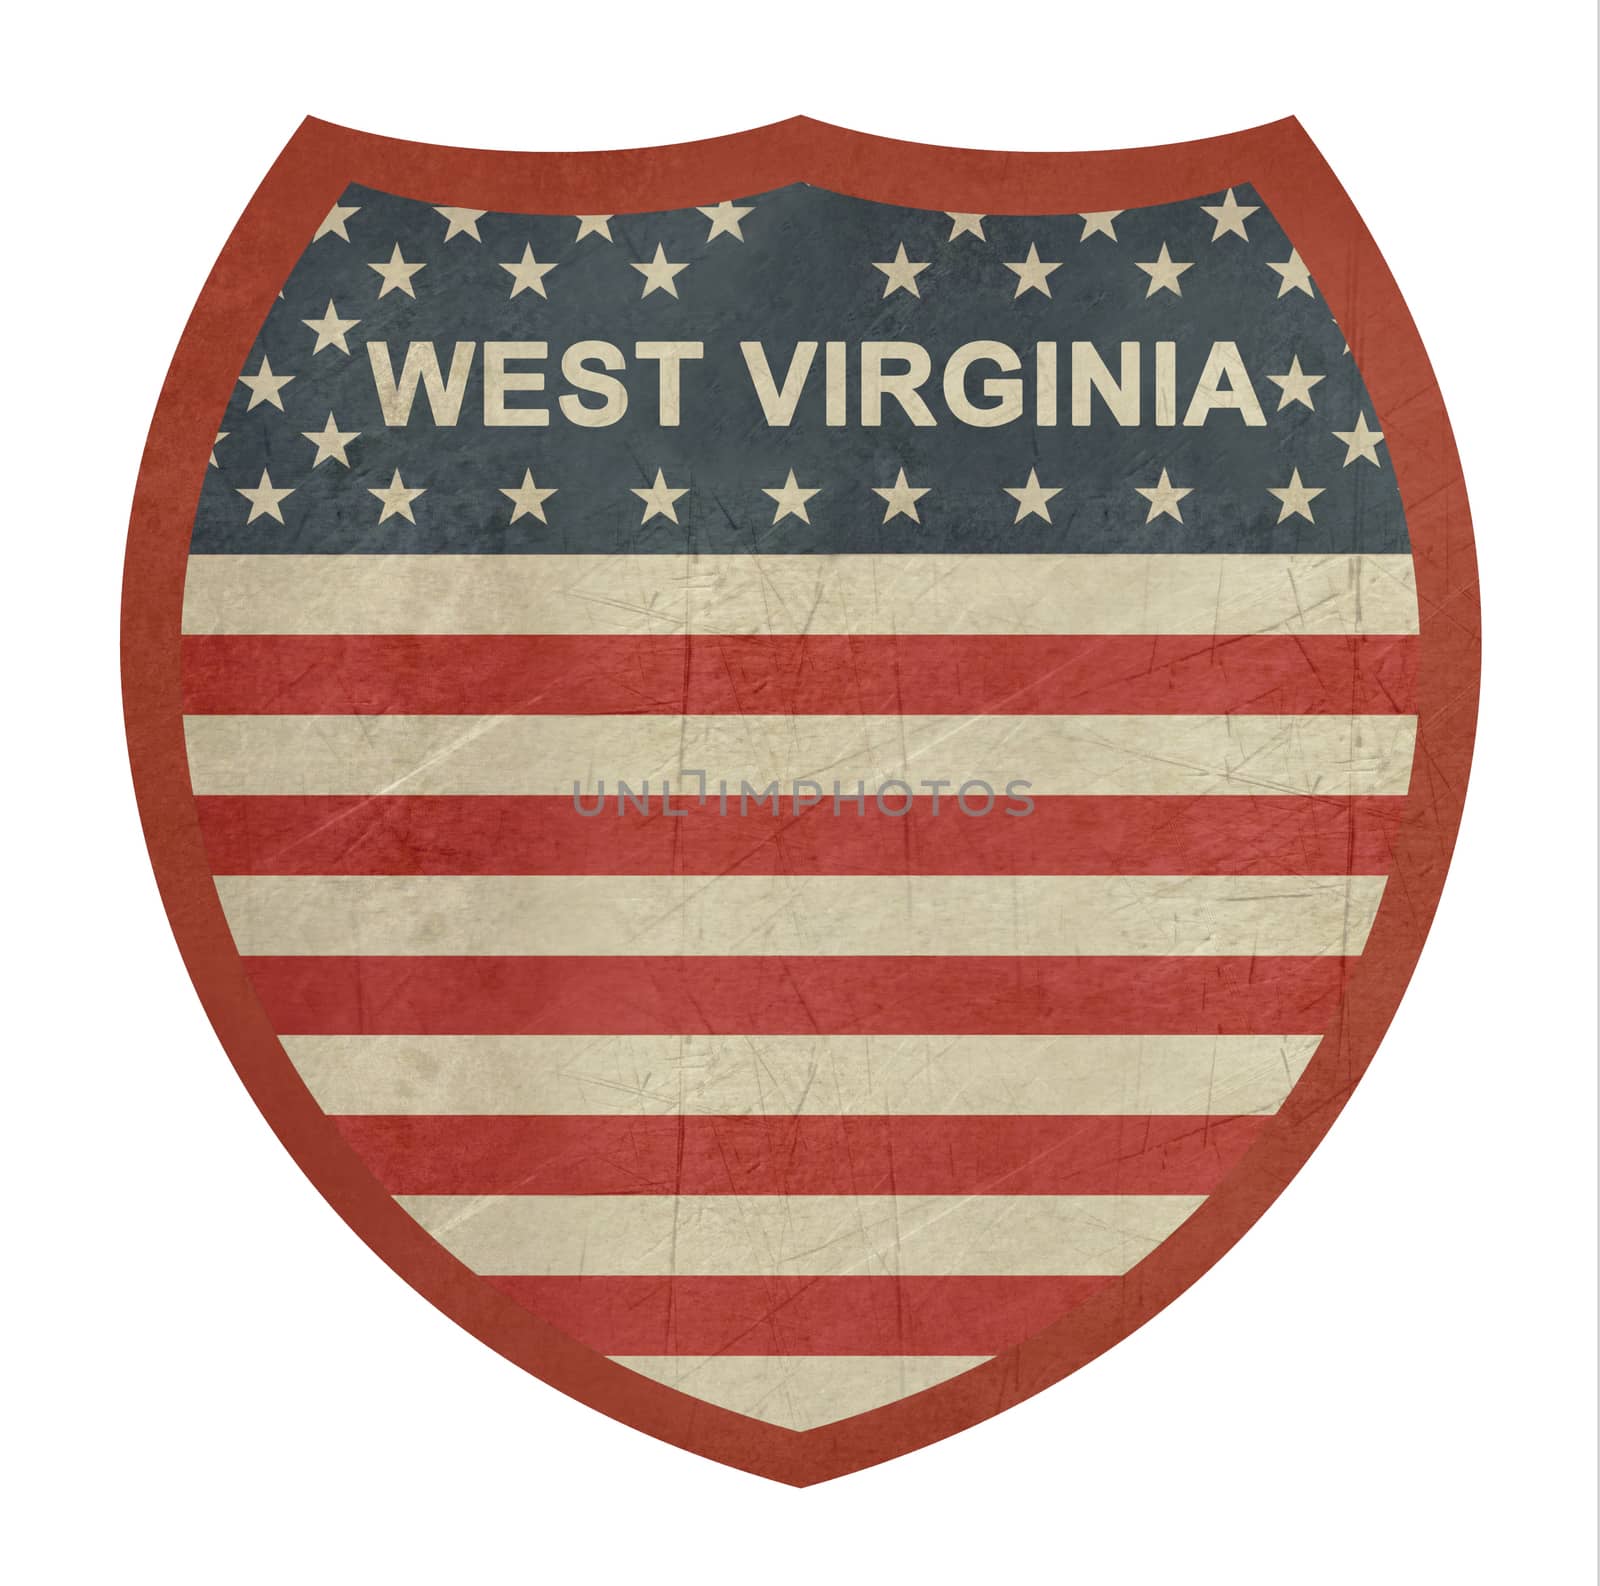 Grunge West Virginia American interstate highway sign by speedfighter